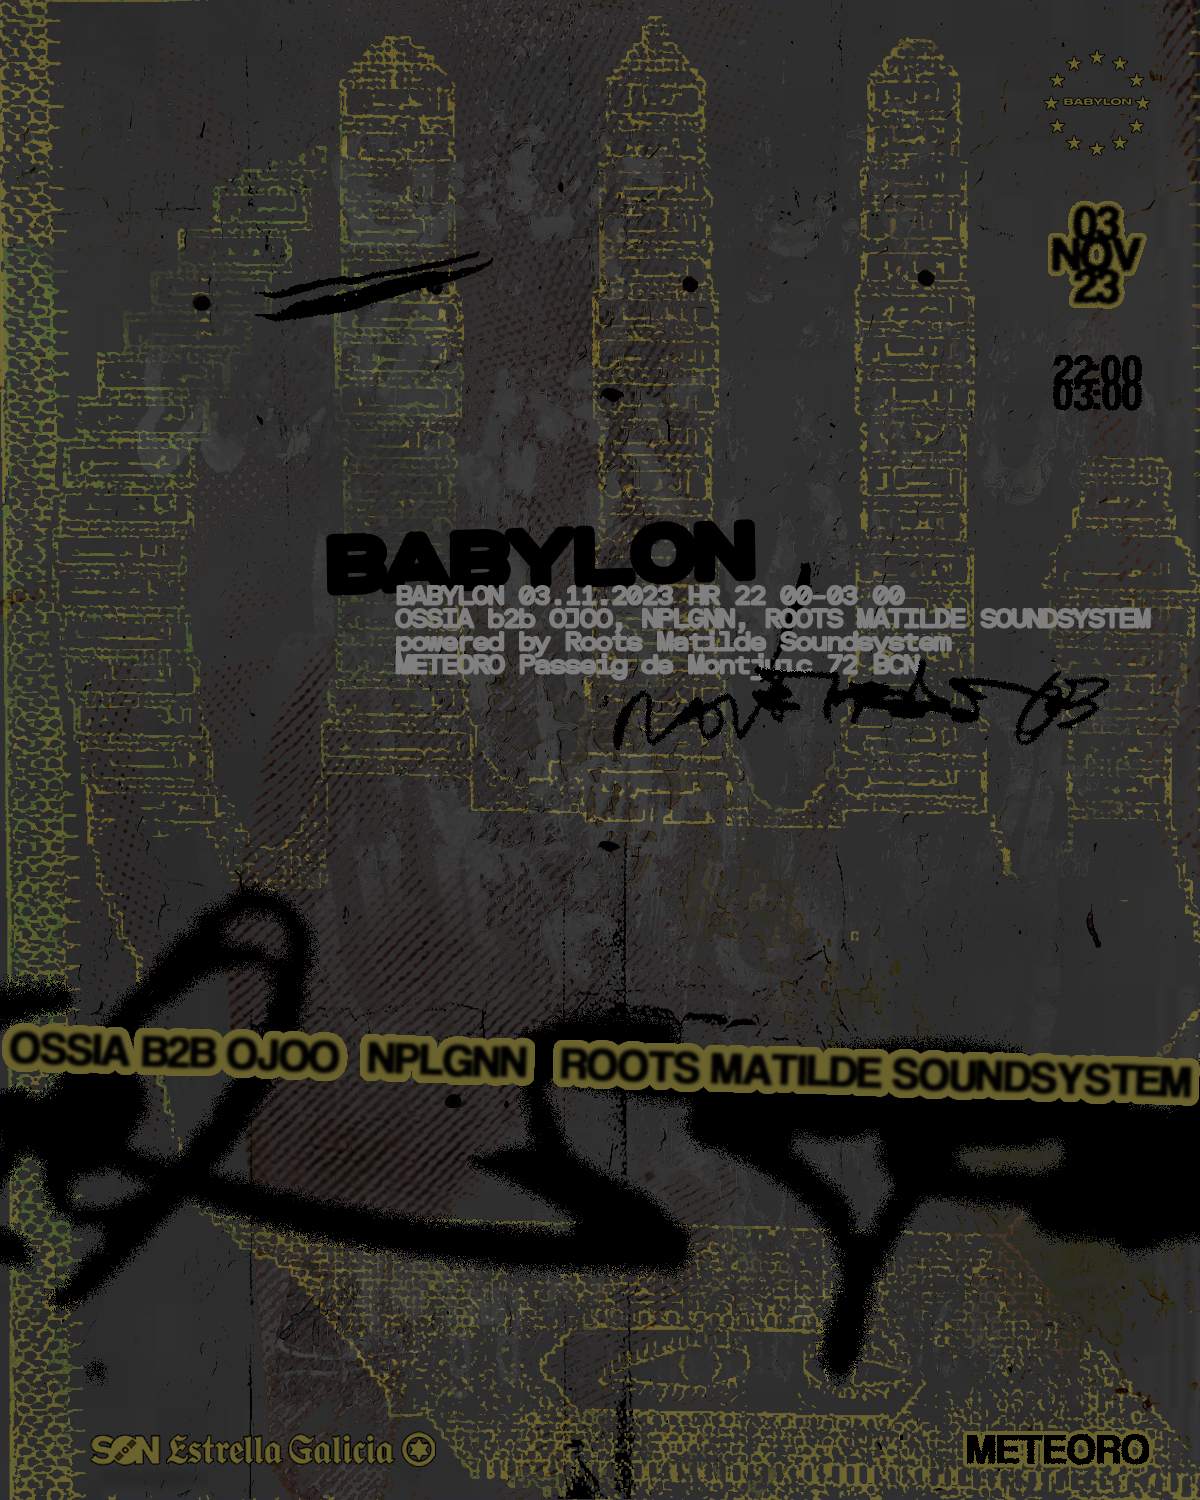 Babylon 11 with Ossia b2b OJOO - NPLGNN - Roots Matilde Sound - Página frontal